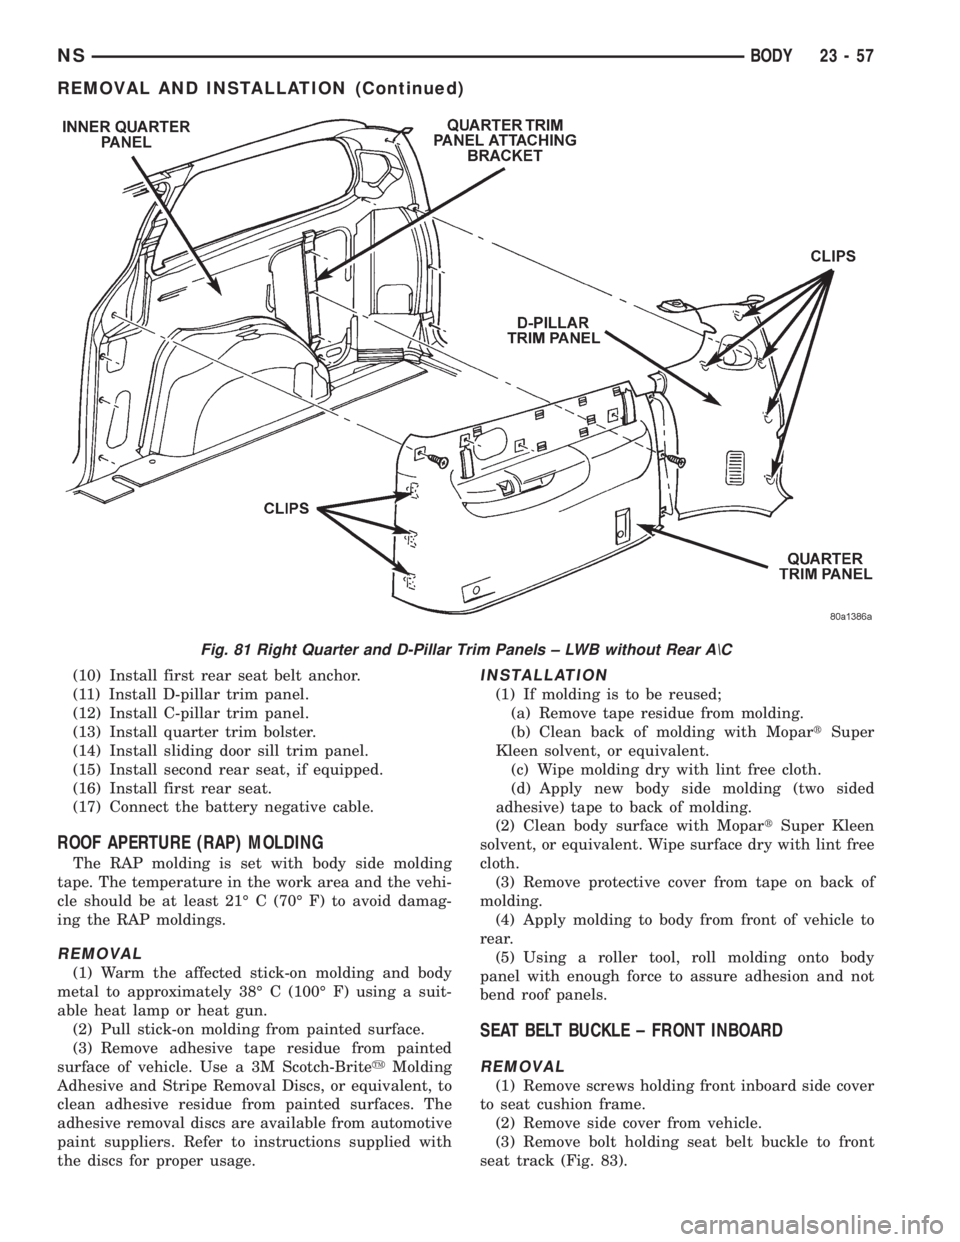 CHRYSLER VOYAGER 1996  Service Manual (10) Install first rear seat belt anchor.
(11) Install D-pillar trim panel.
(12) Install C-pillar trim panel.
(13) Install quarter trim bolster.
(14) Install sliding door sill trim panel.
(15) Install